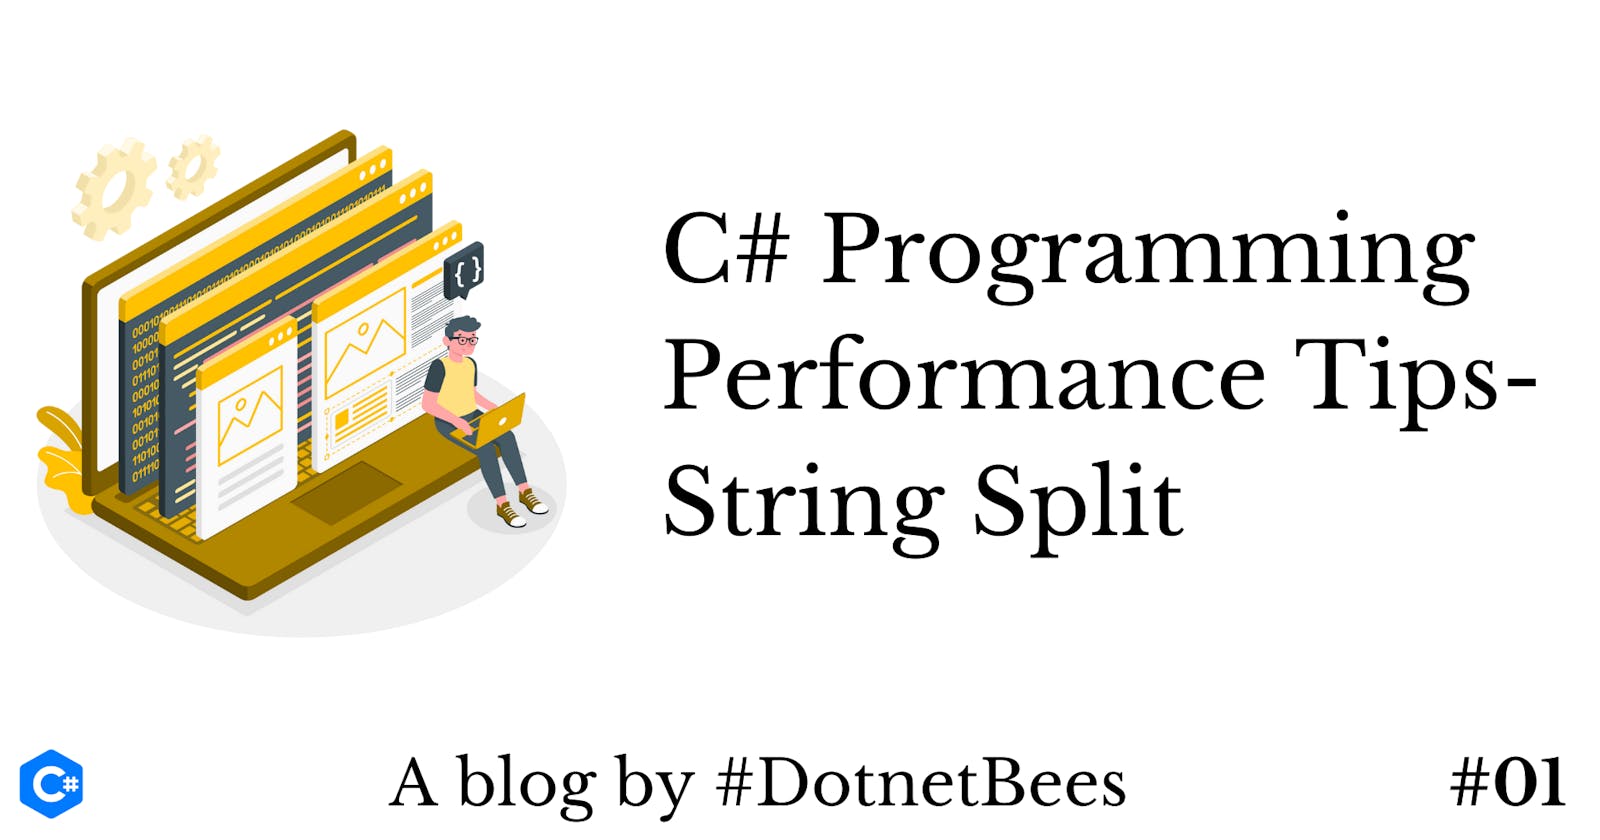 C# Programming Performance Tips - String Split